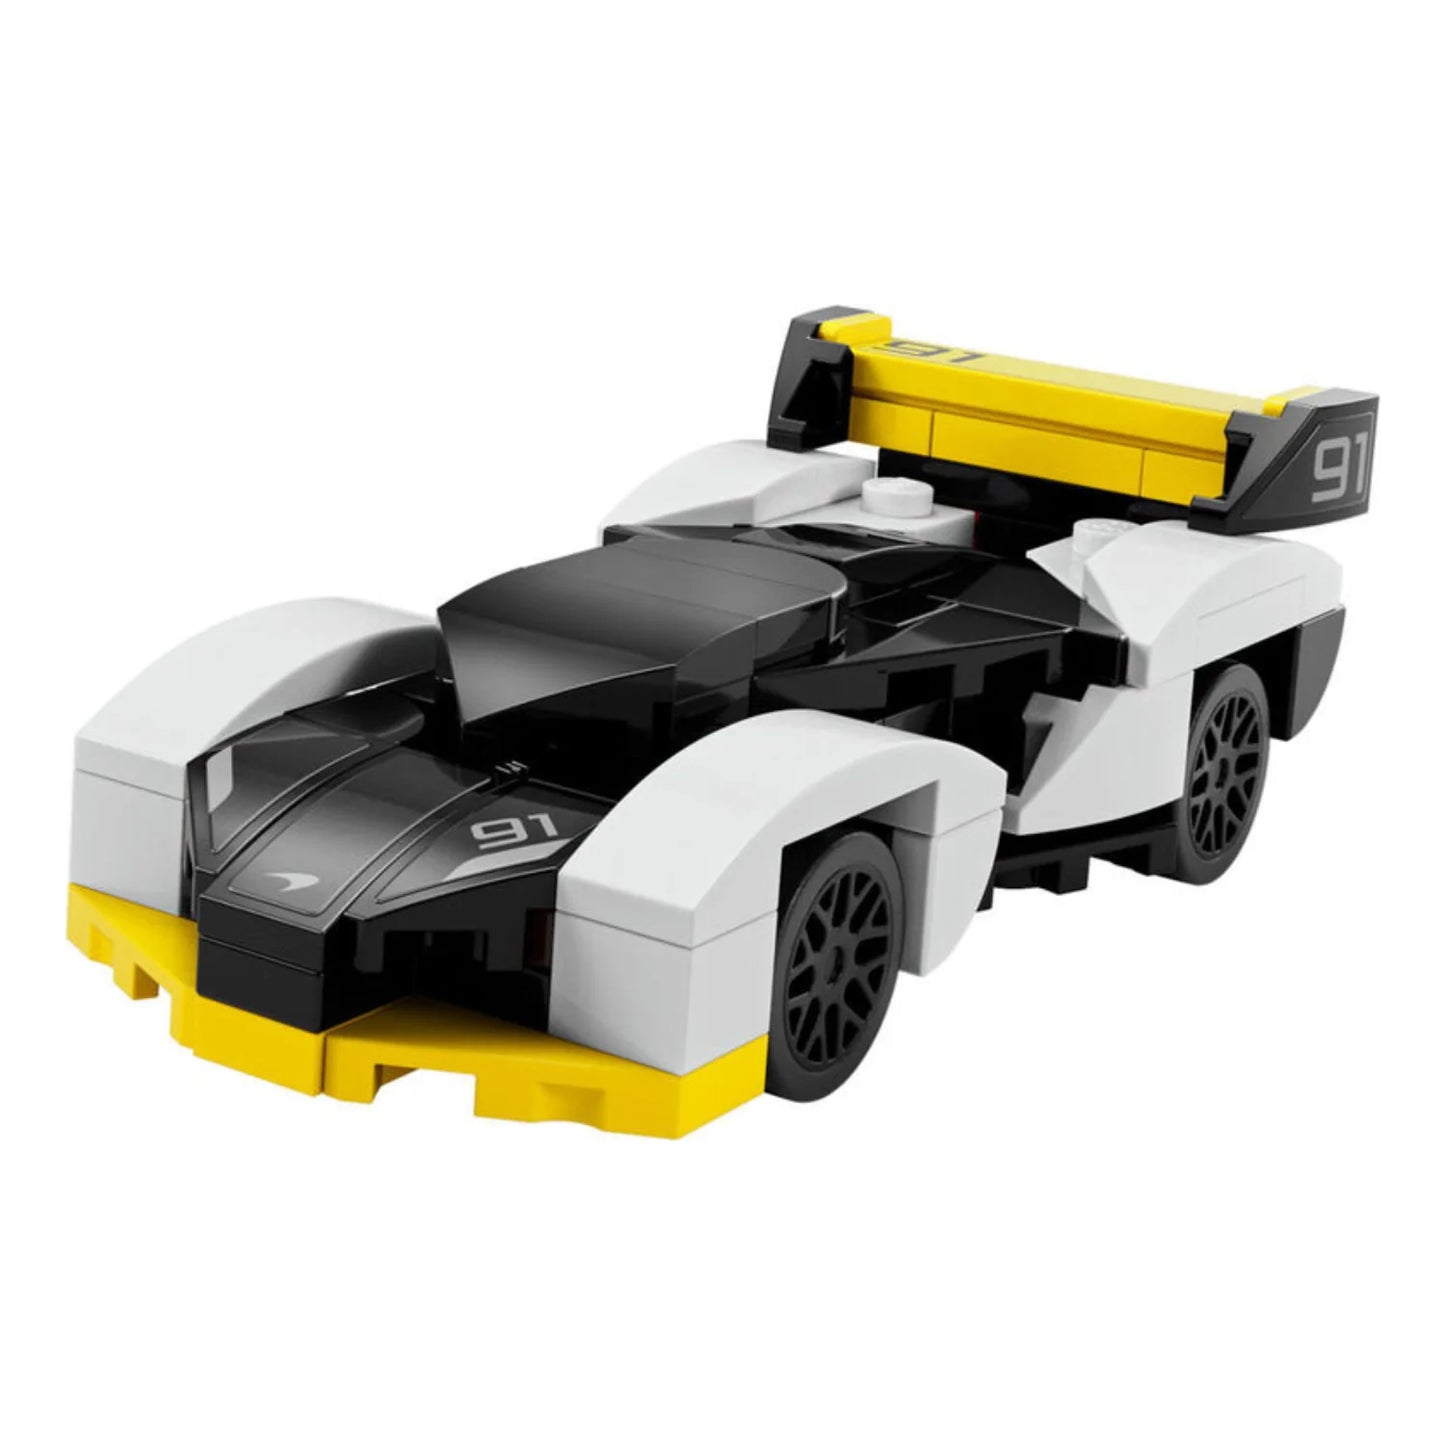 Lego Speed Champions McLaren Solus GT 30675 Polybag